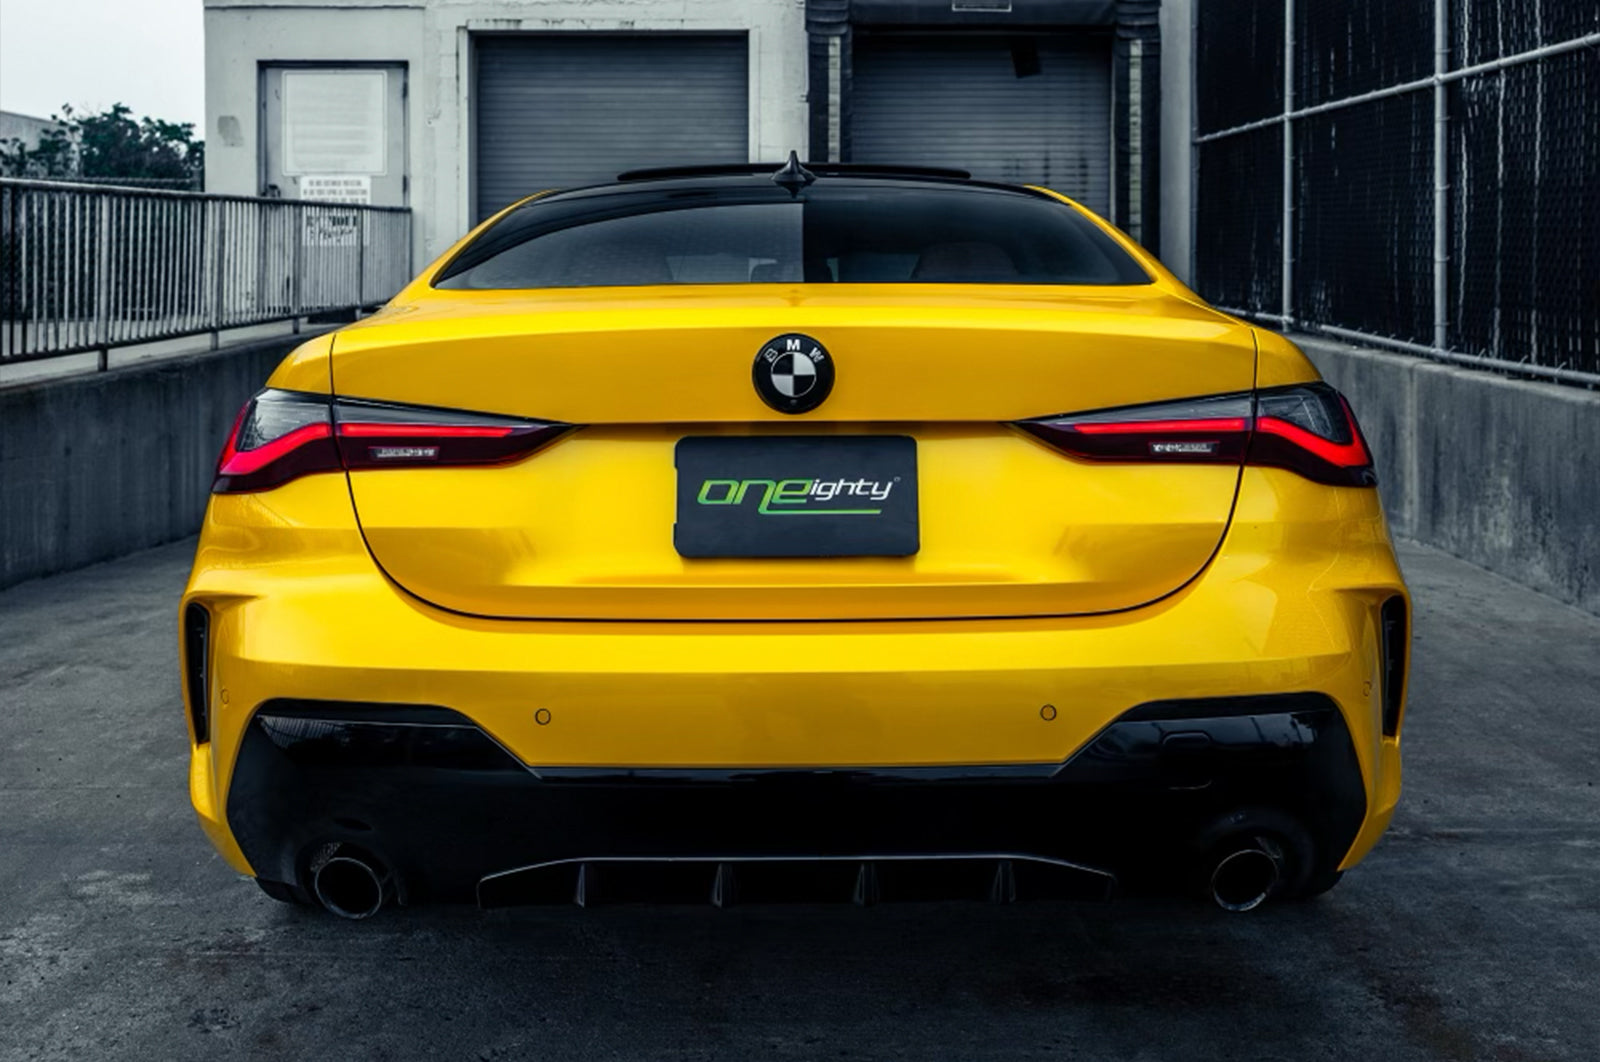 BMW G80 - Supergloss Metallic Dandelion Yellow